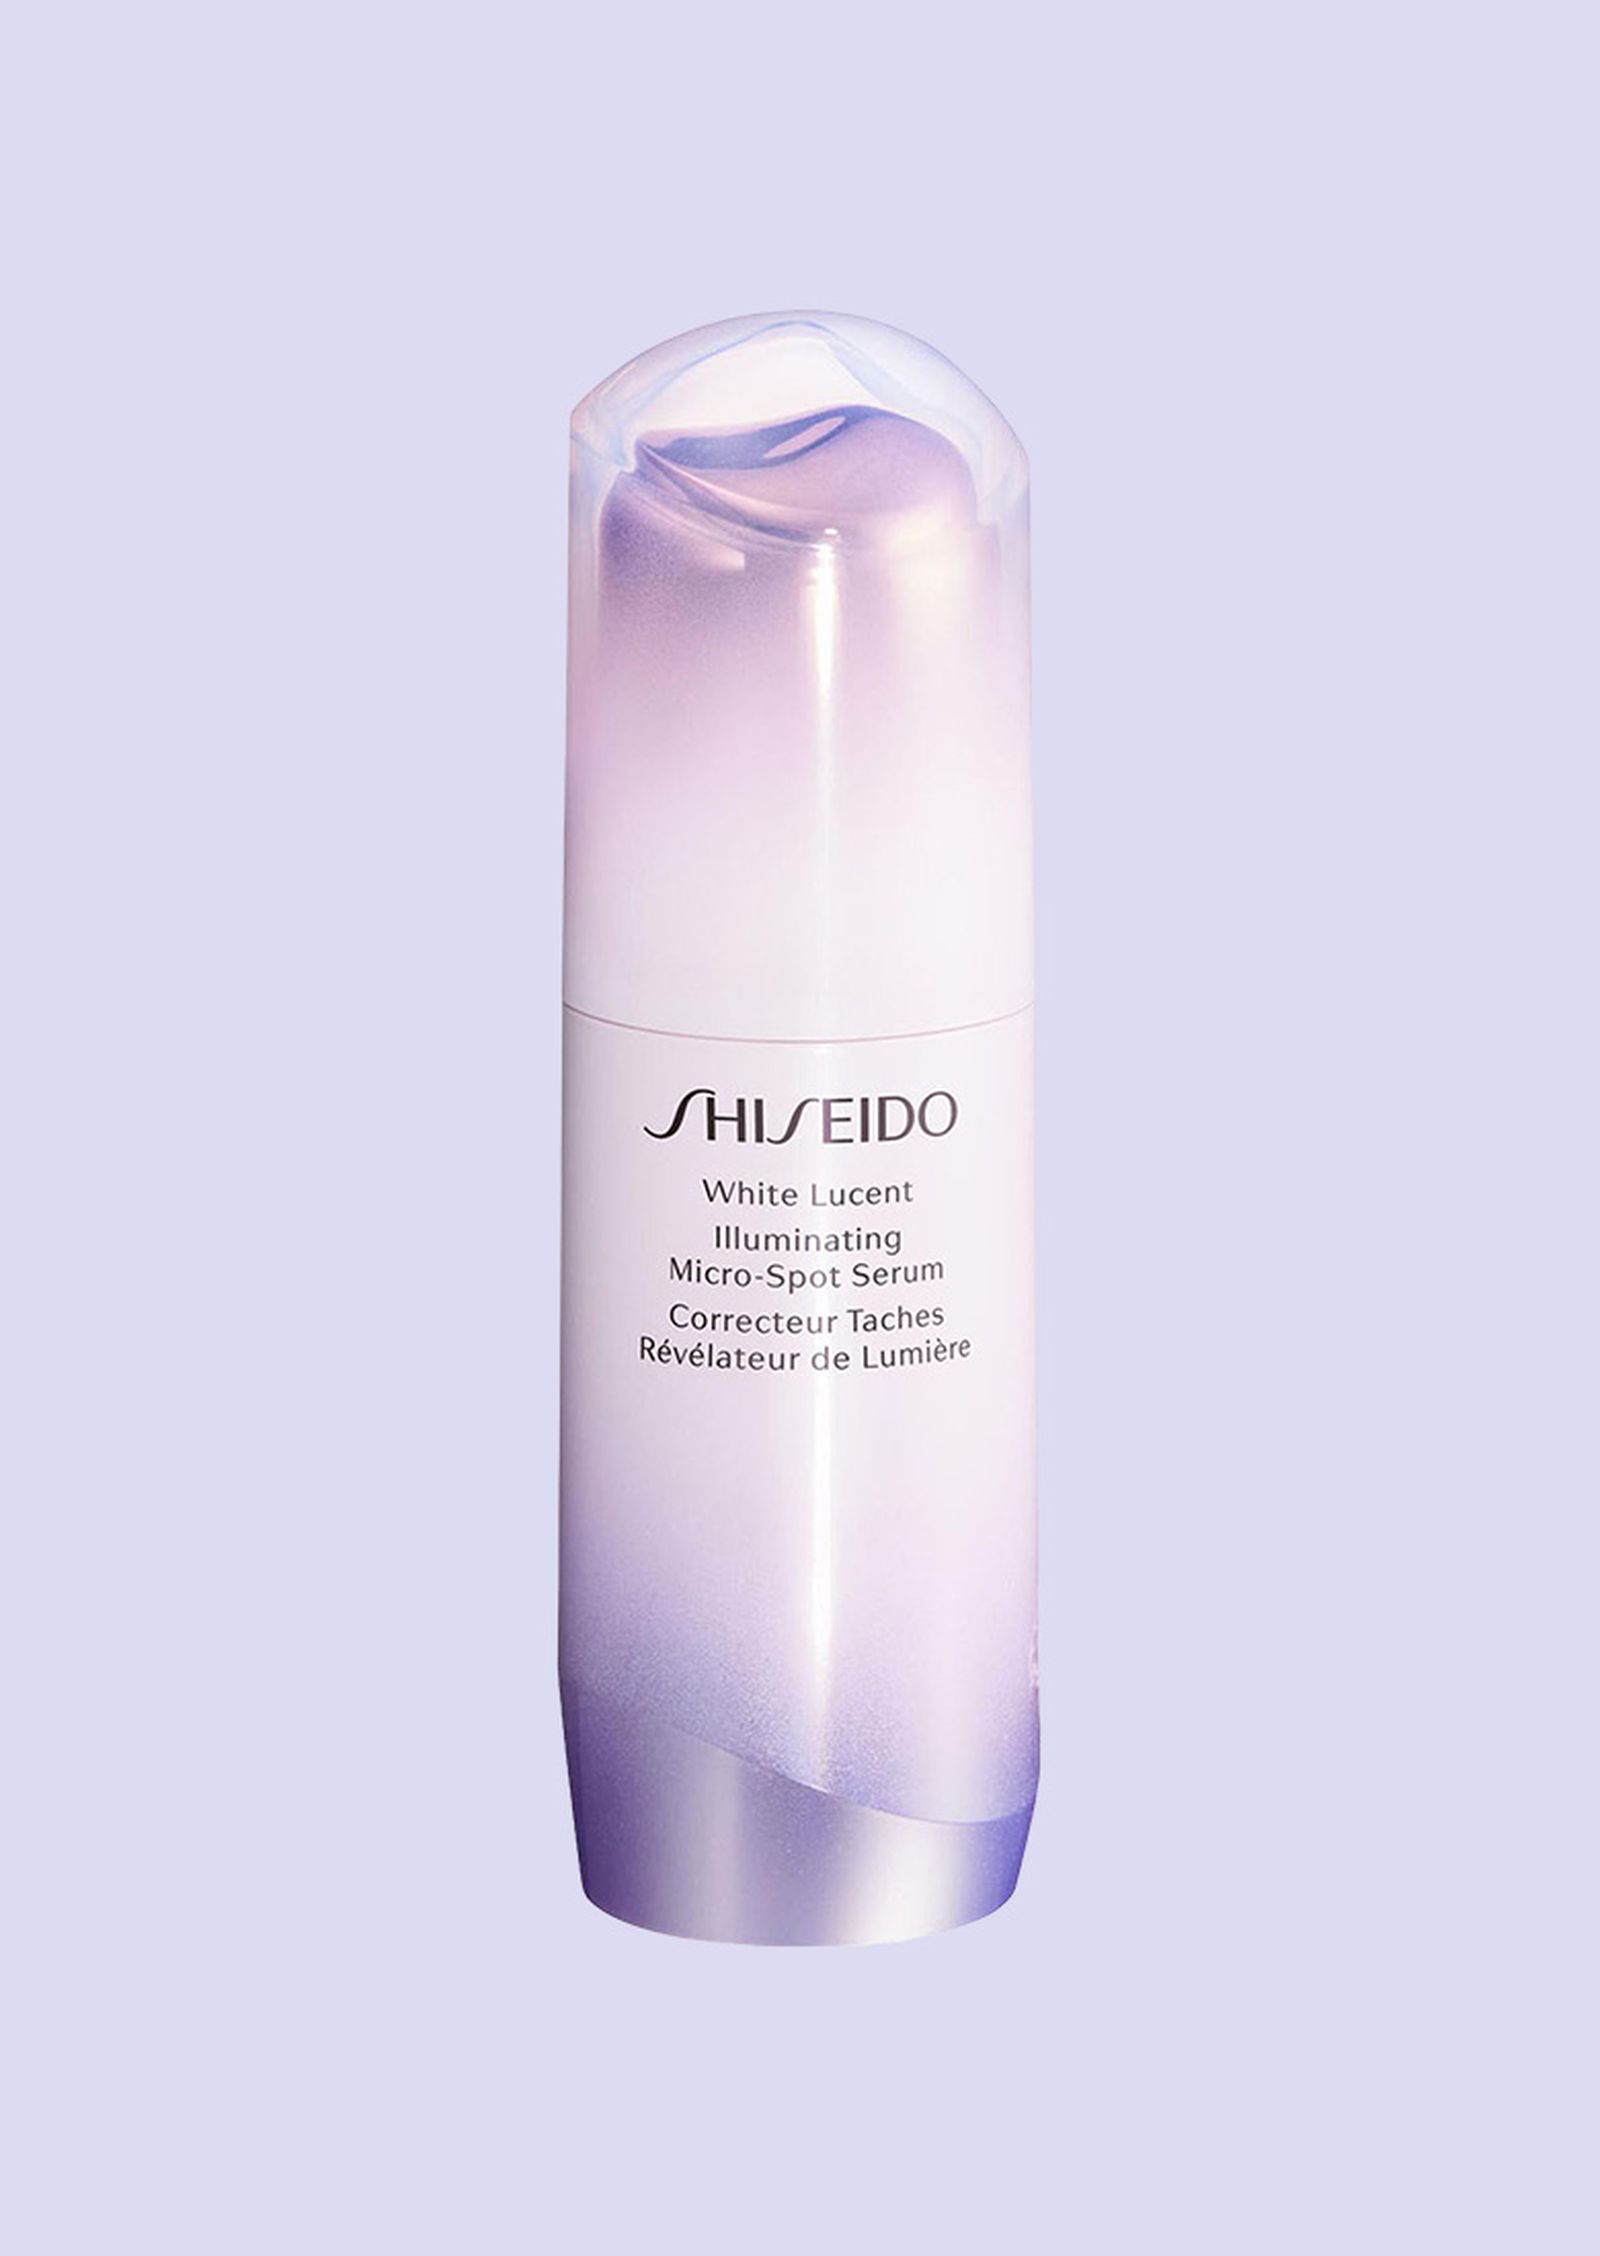 Shiseido Illuminating Micro-Spot Serum White Lucent